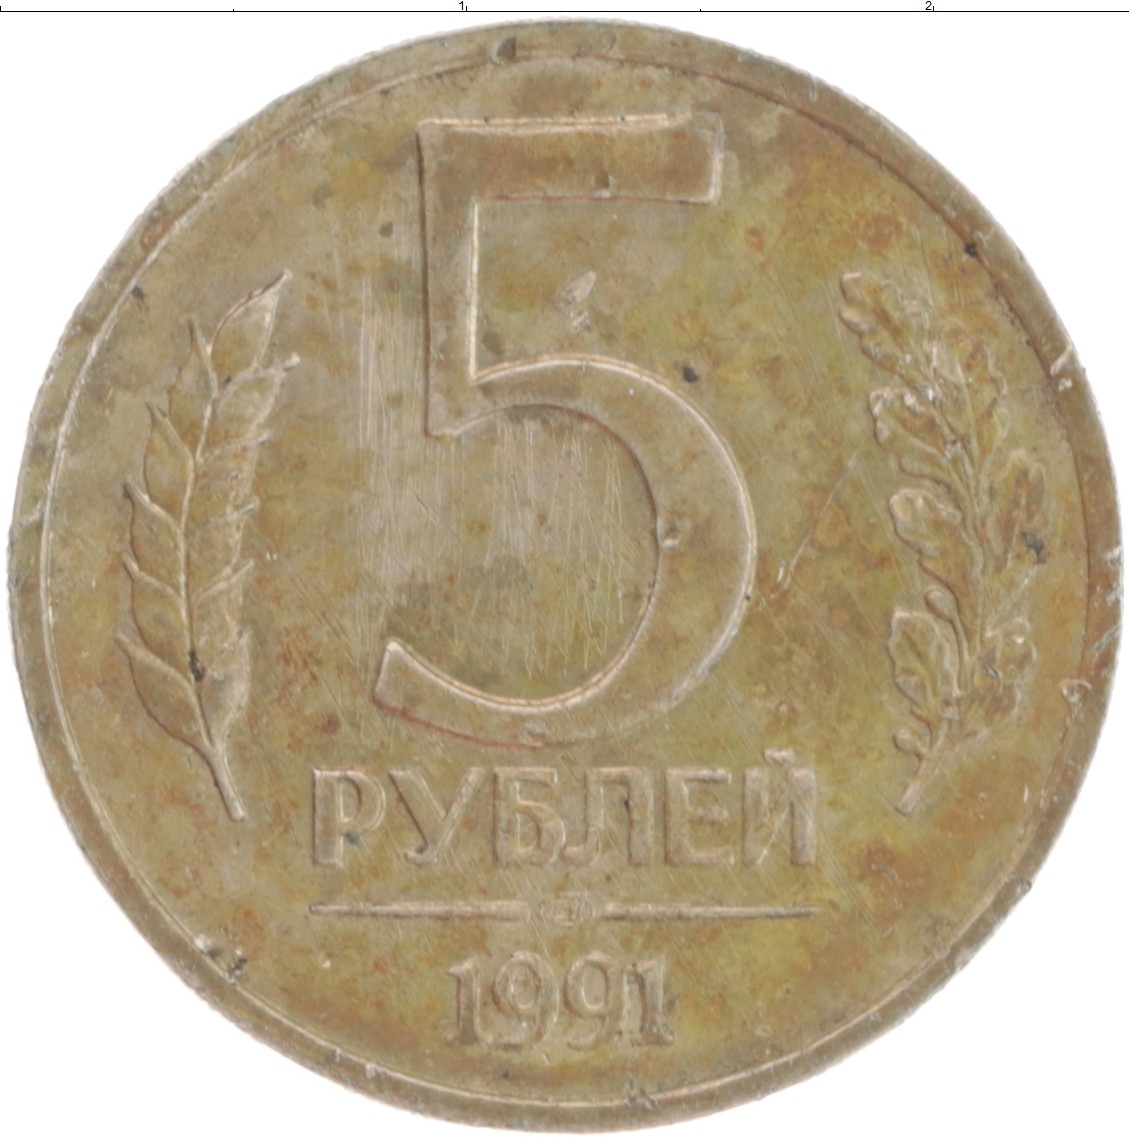 Цена монет ссср 5 рублей